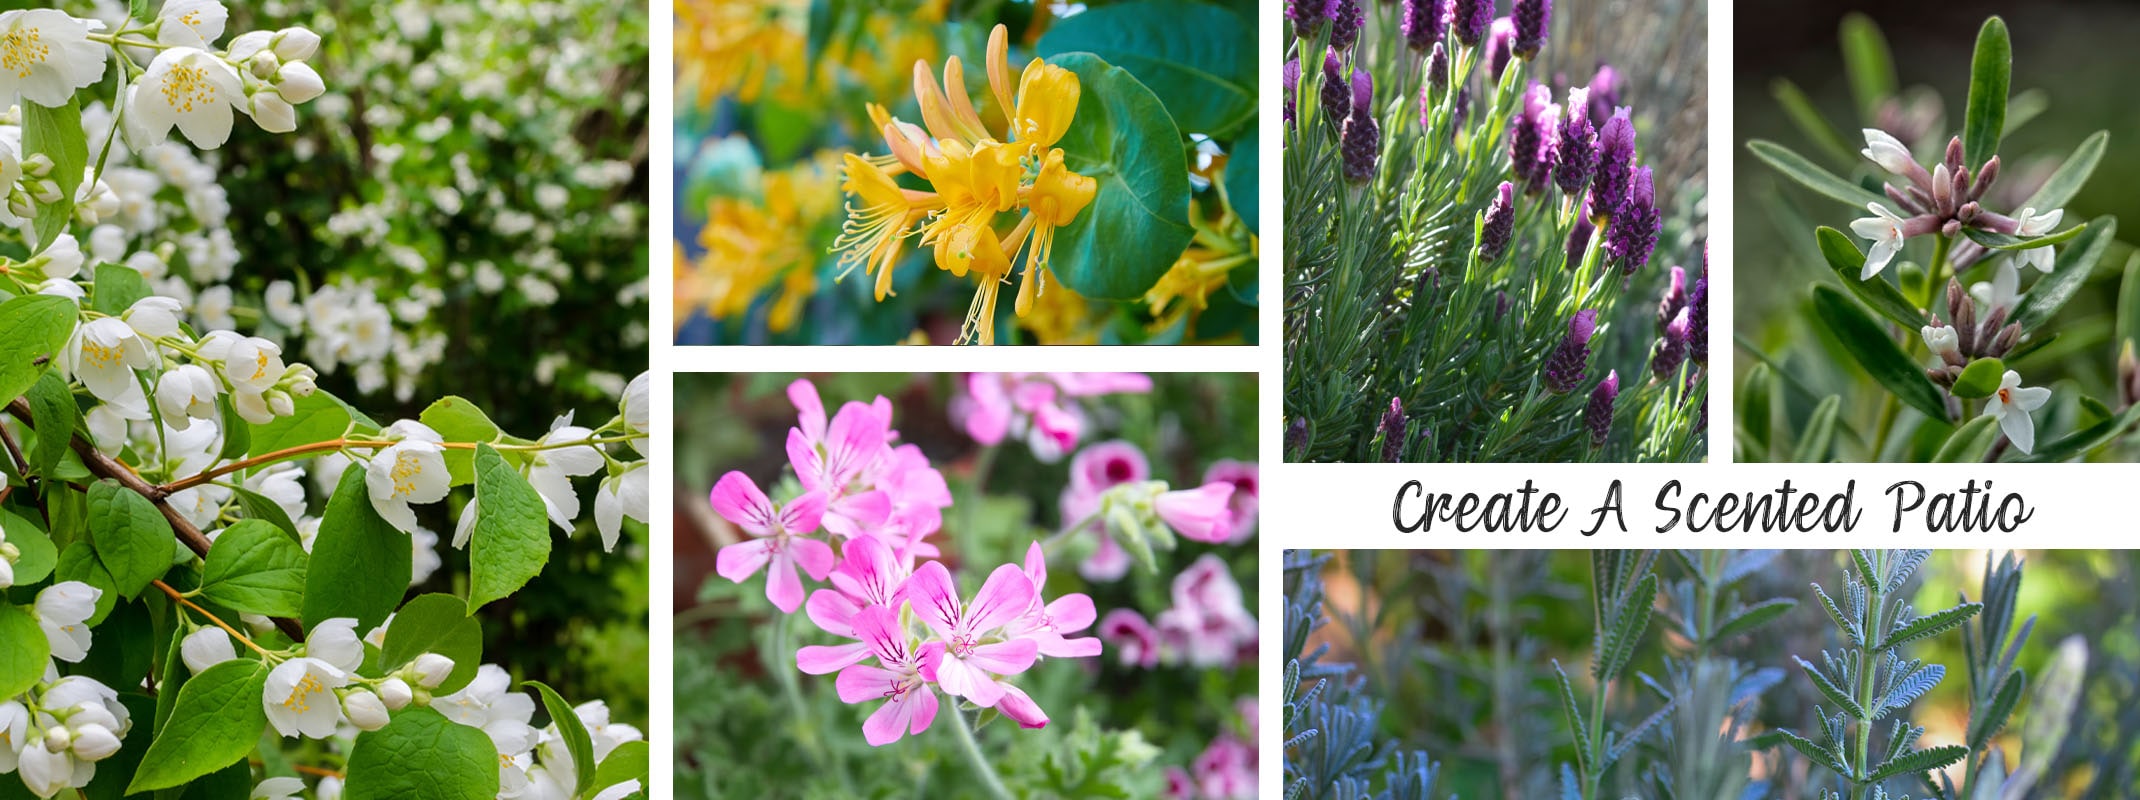 create a scented patio jasmine, scented geraniums, honeysuckle, lavender, rosemary, daphne